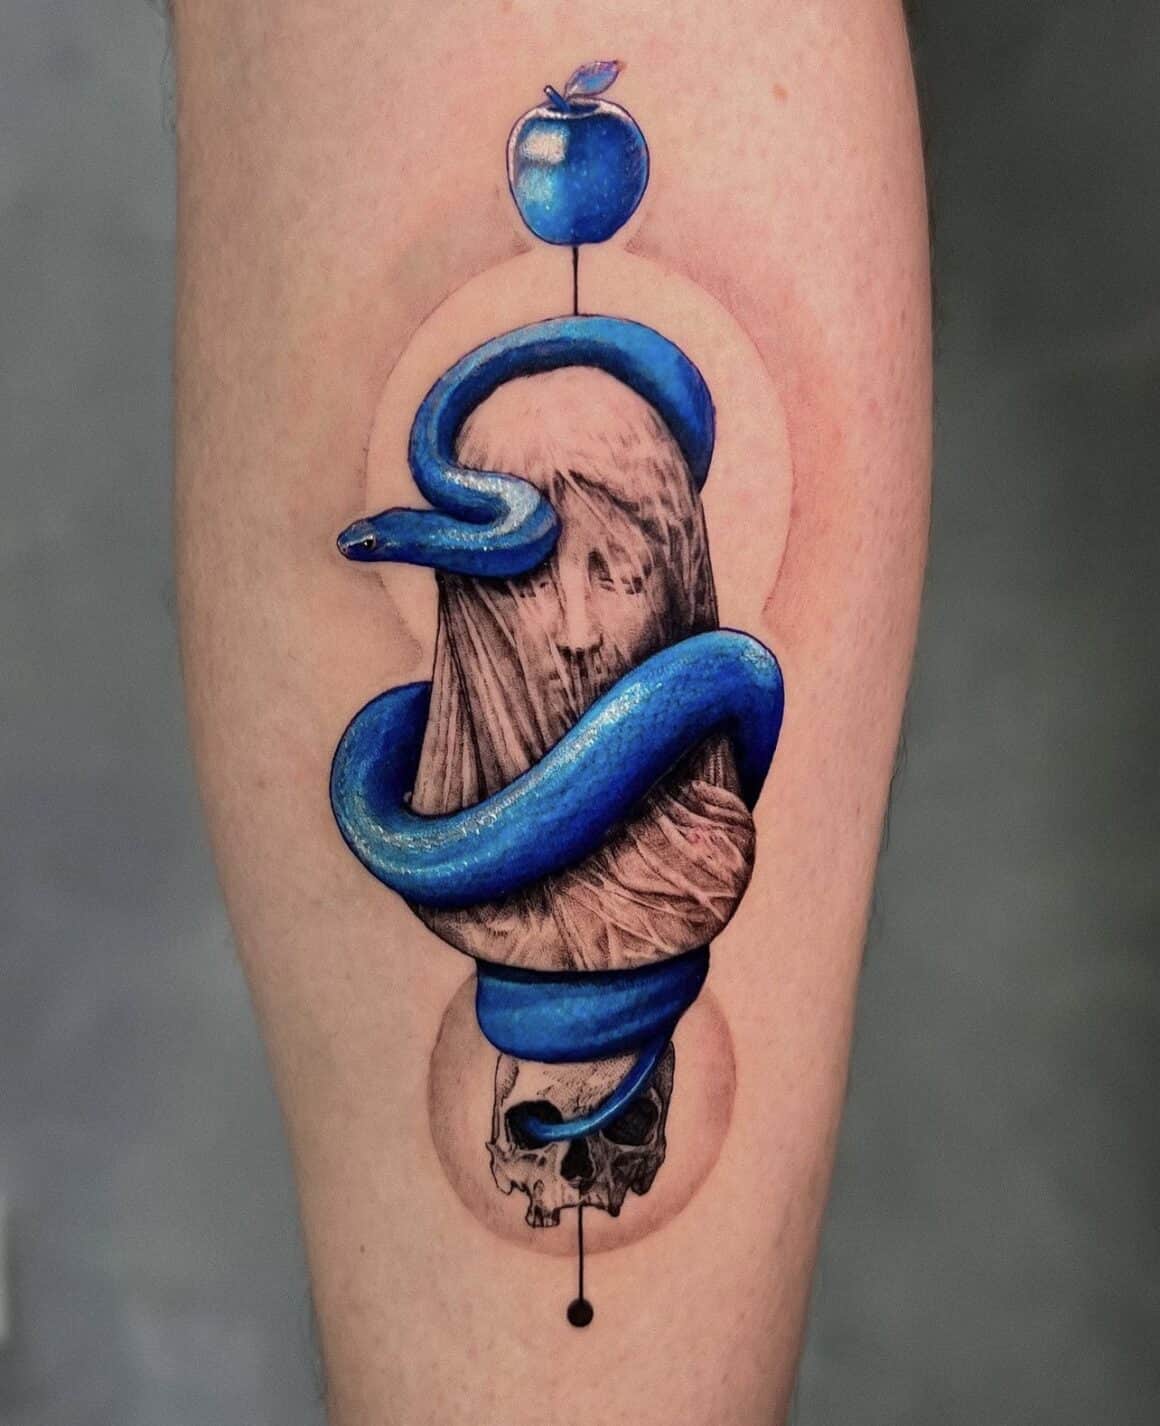 The best snake hip tattoo design and meaning   Онлайн блог о тату  IdeasTattoo